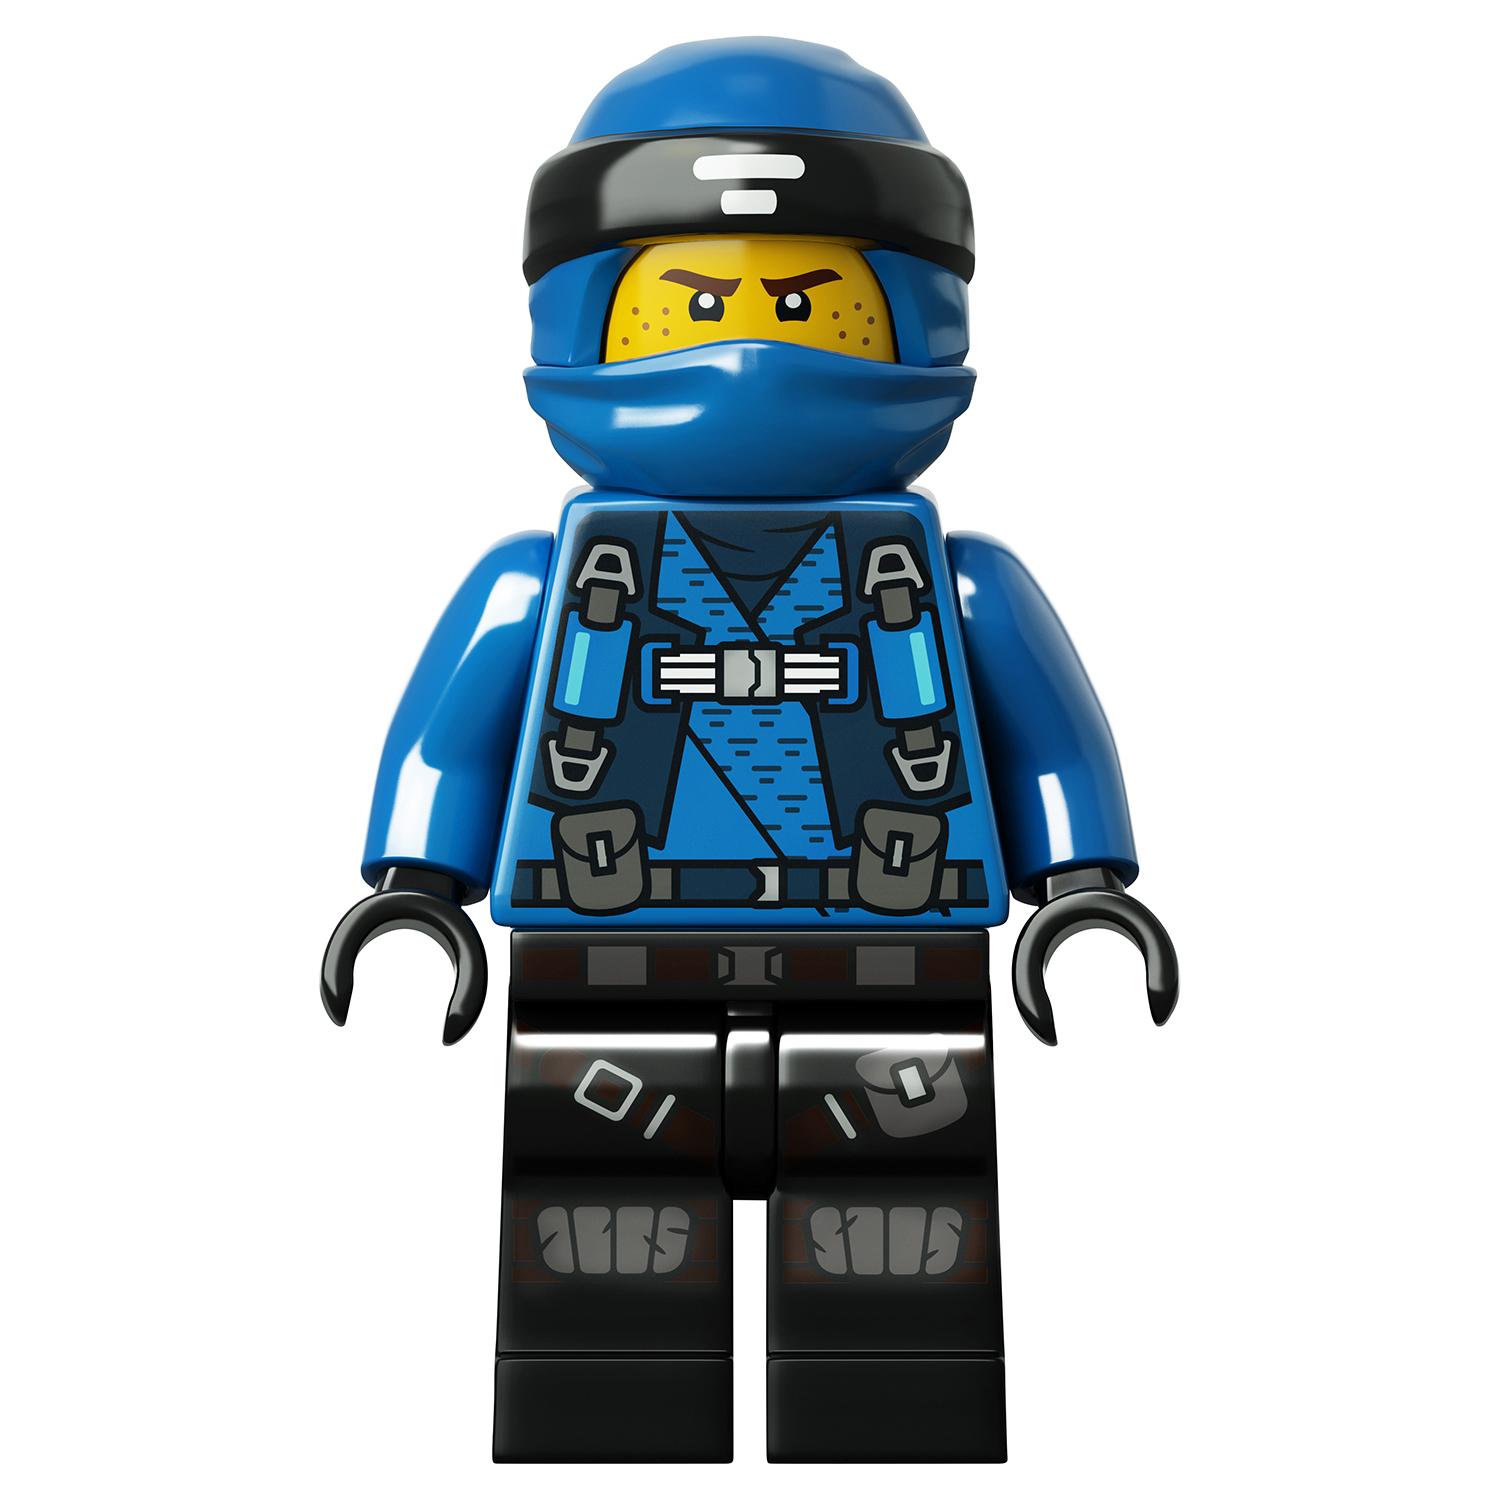 Lego Ninjago 70646 Джей Мастер дракона